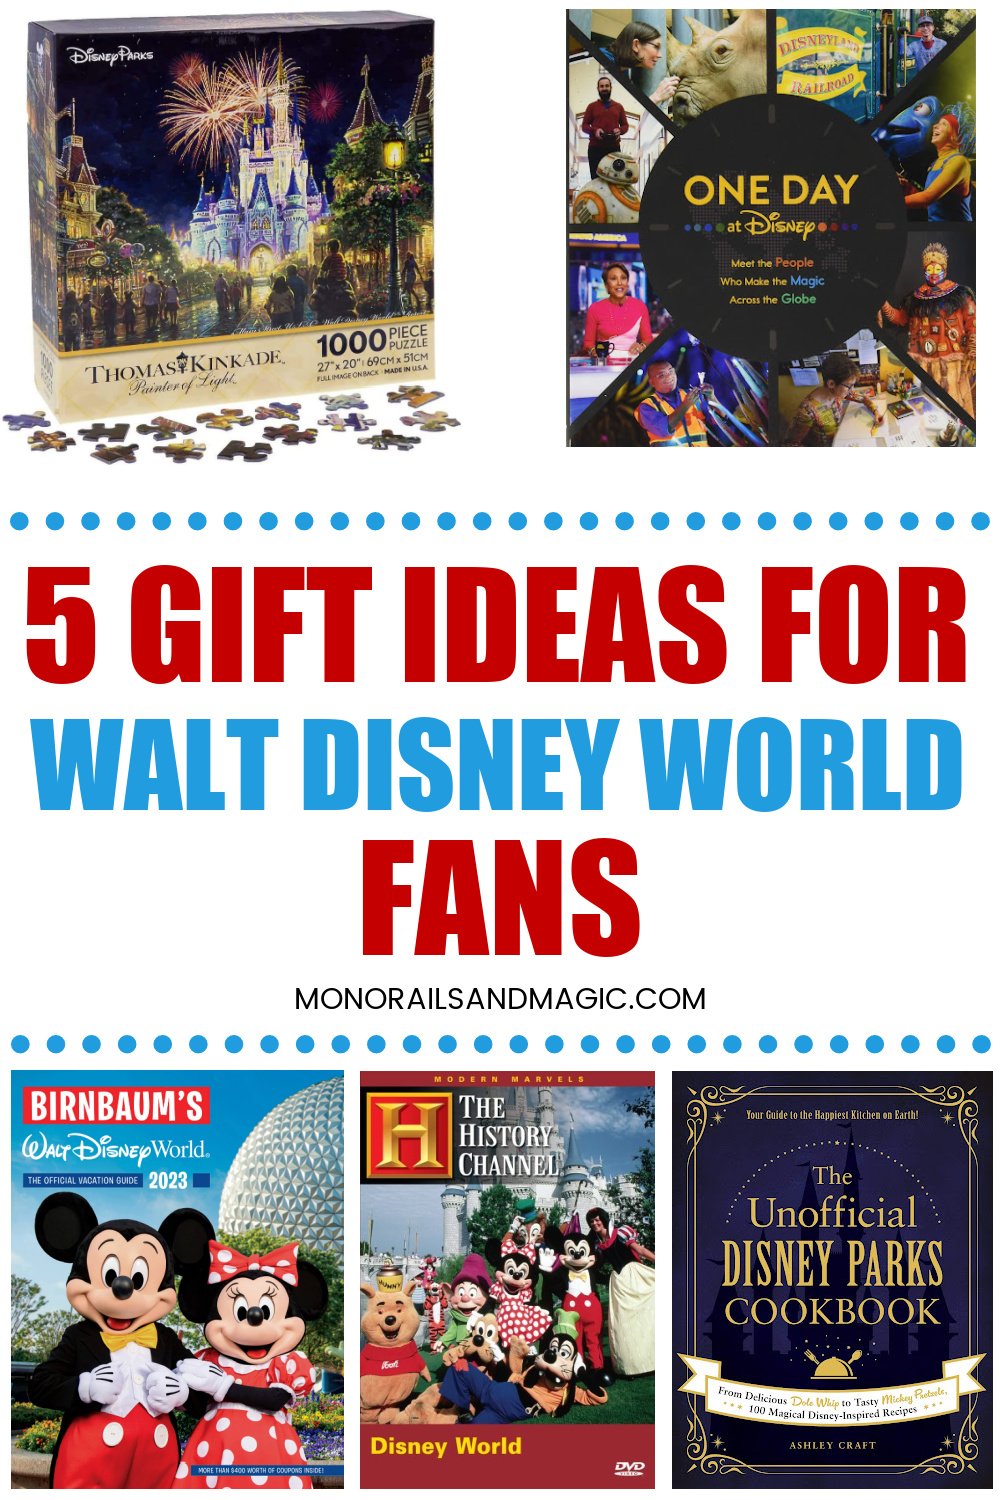 Gift ideas for Walt Disney World fans.